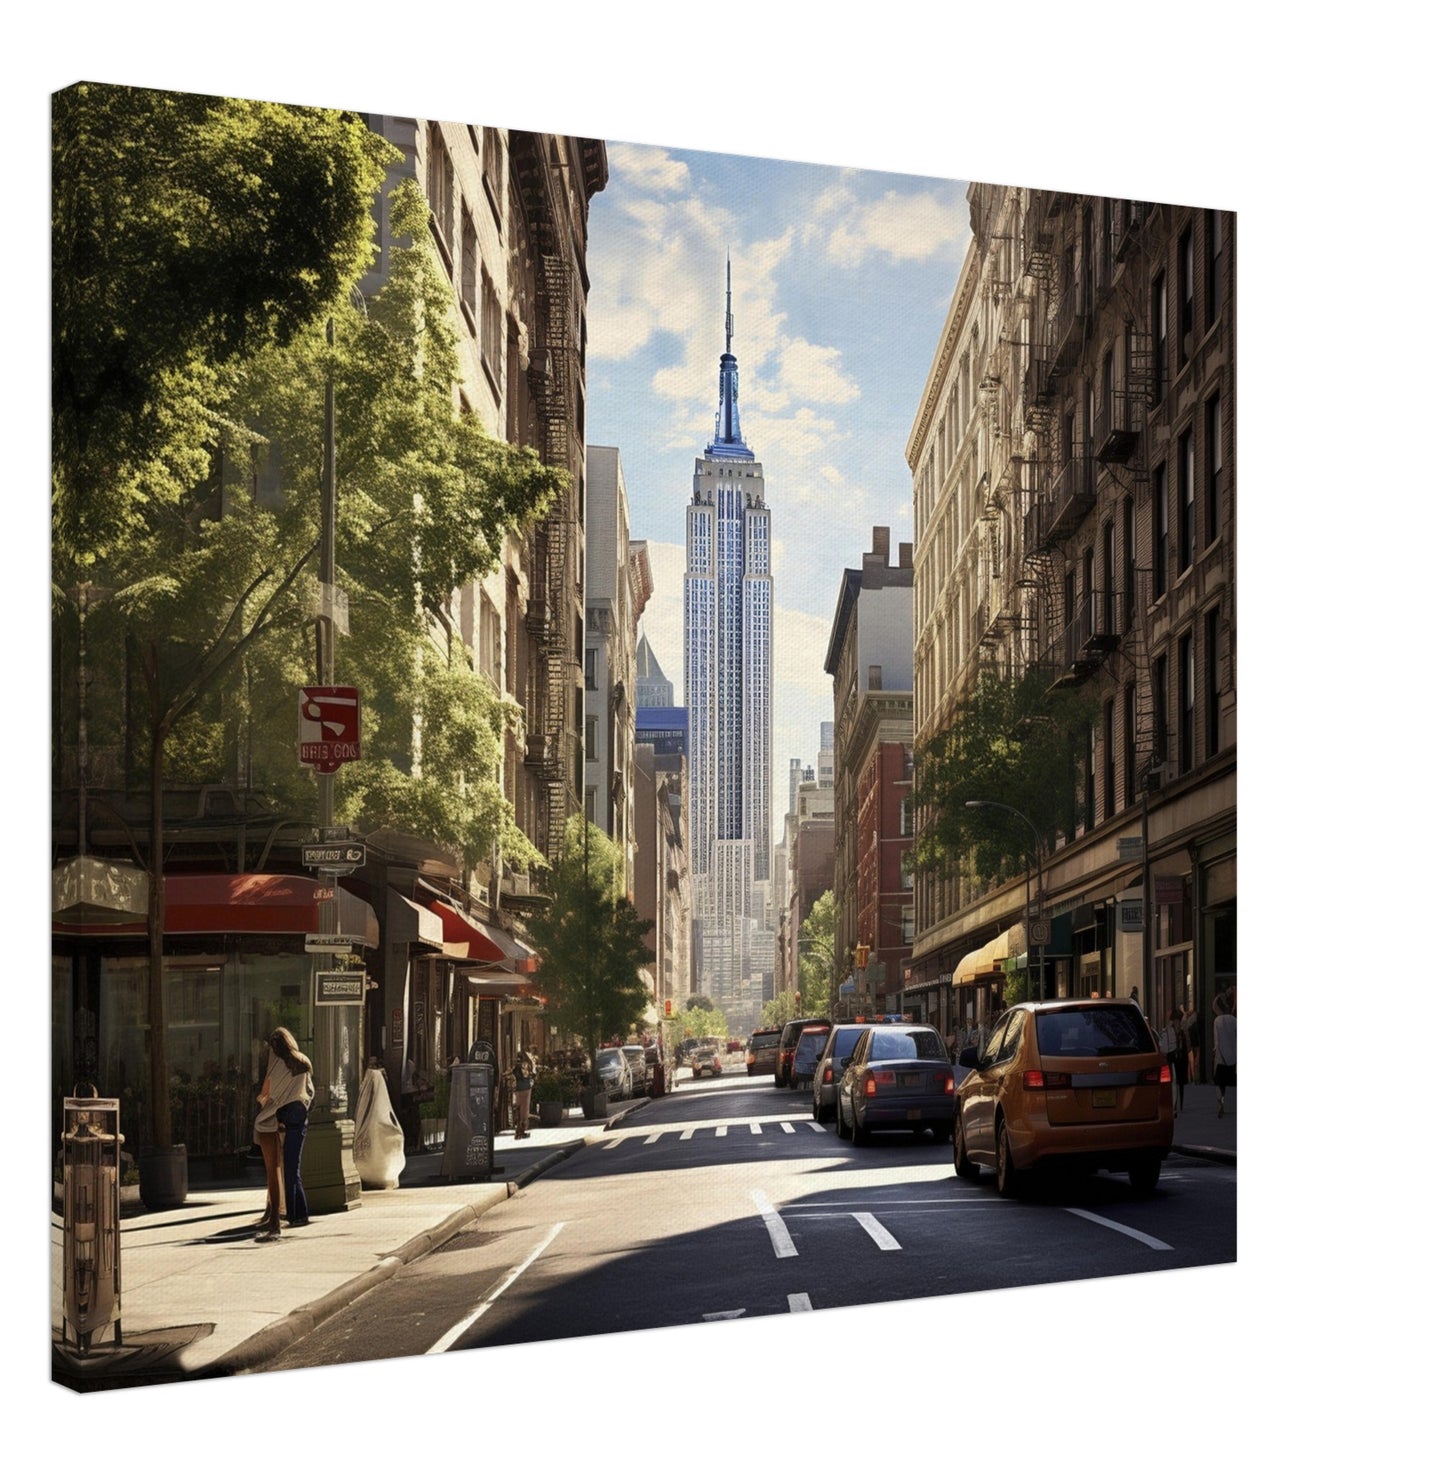 New York City - Canvas - Street Views